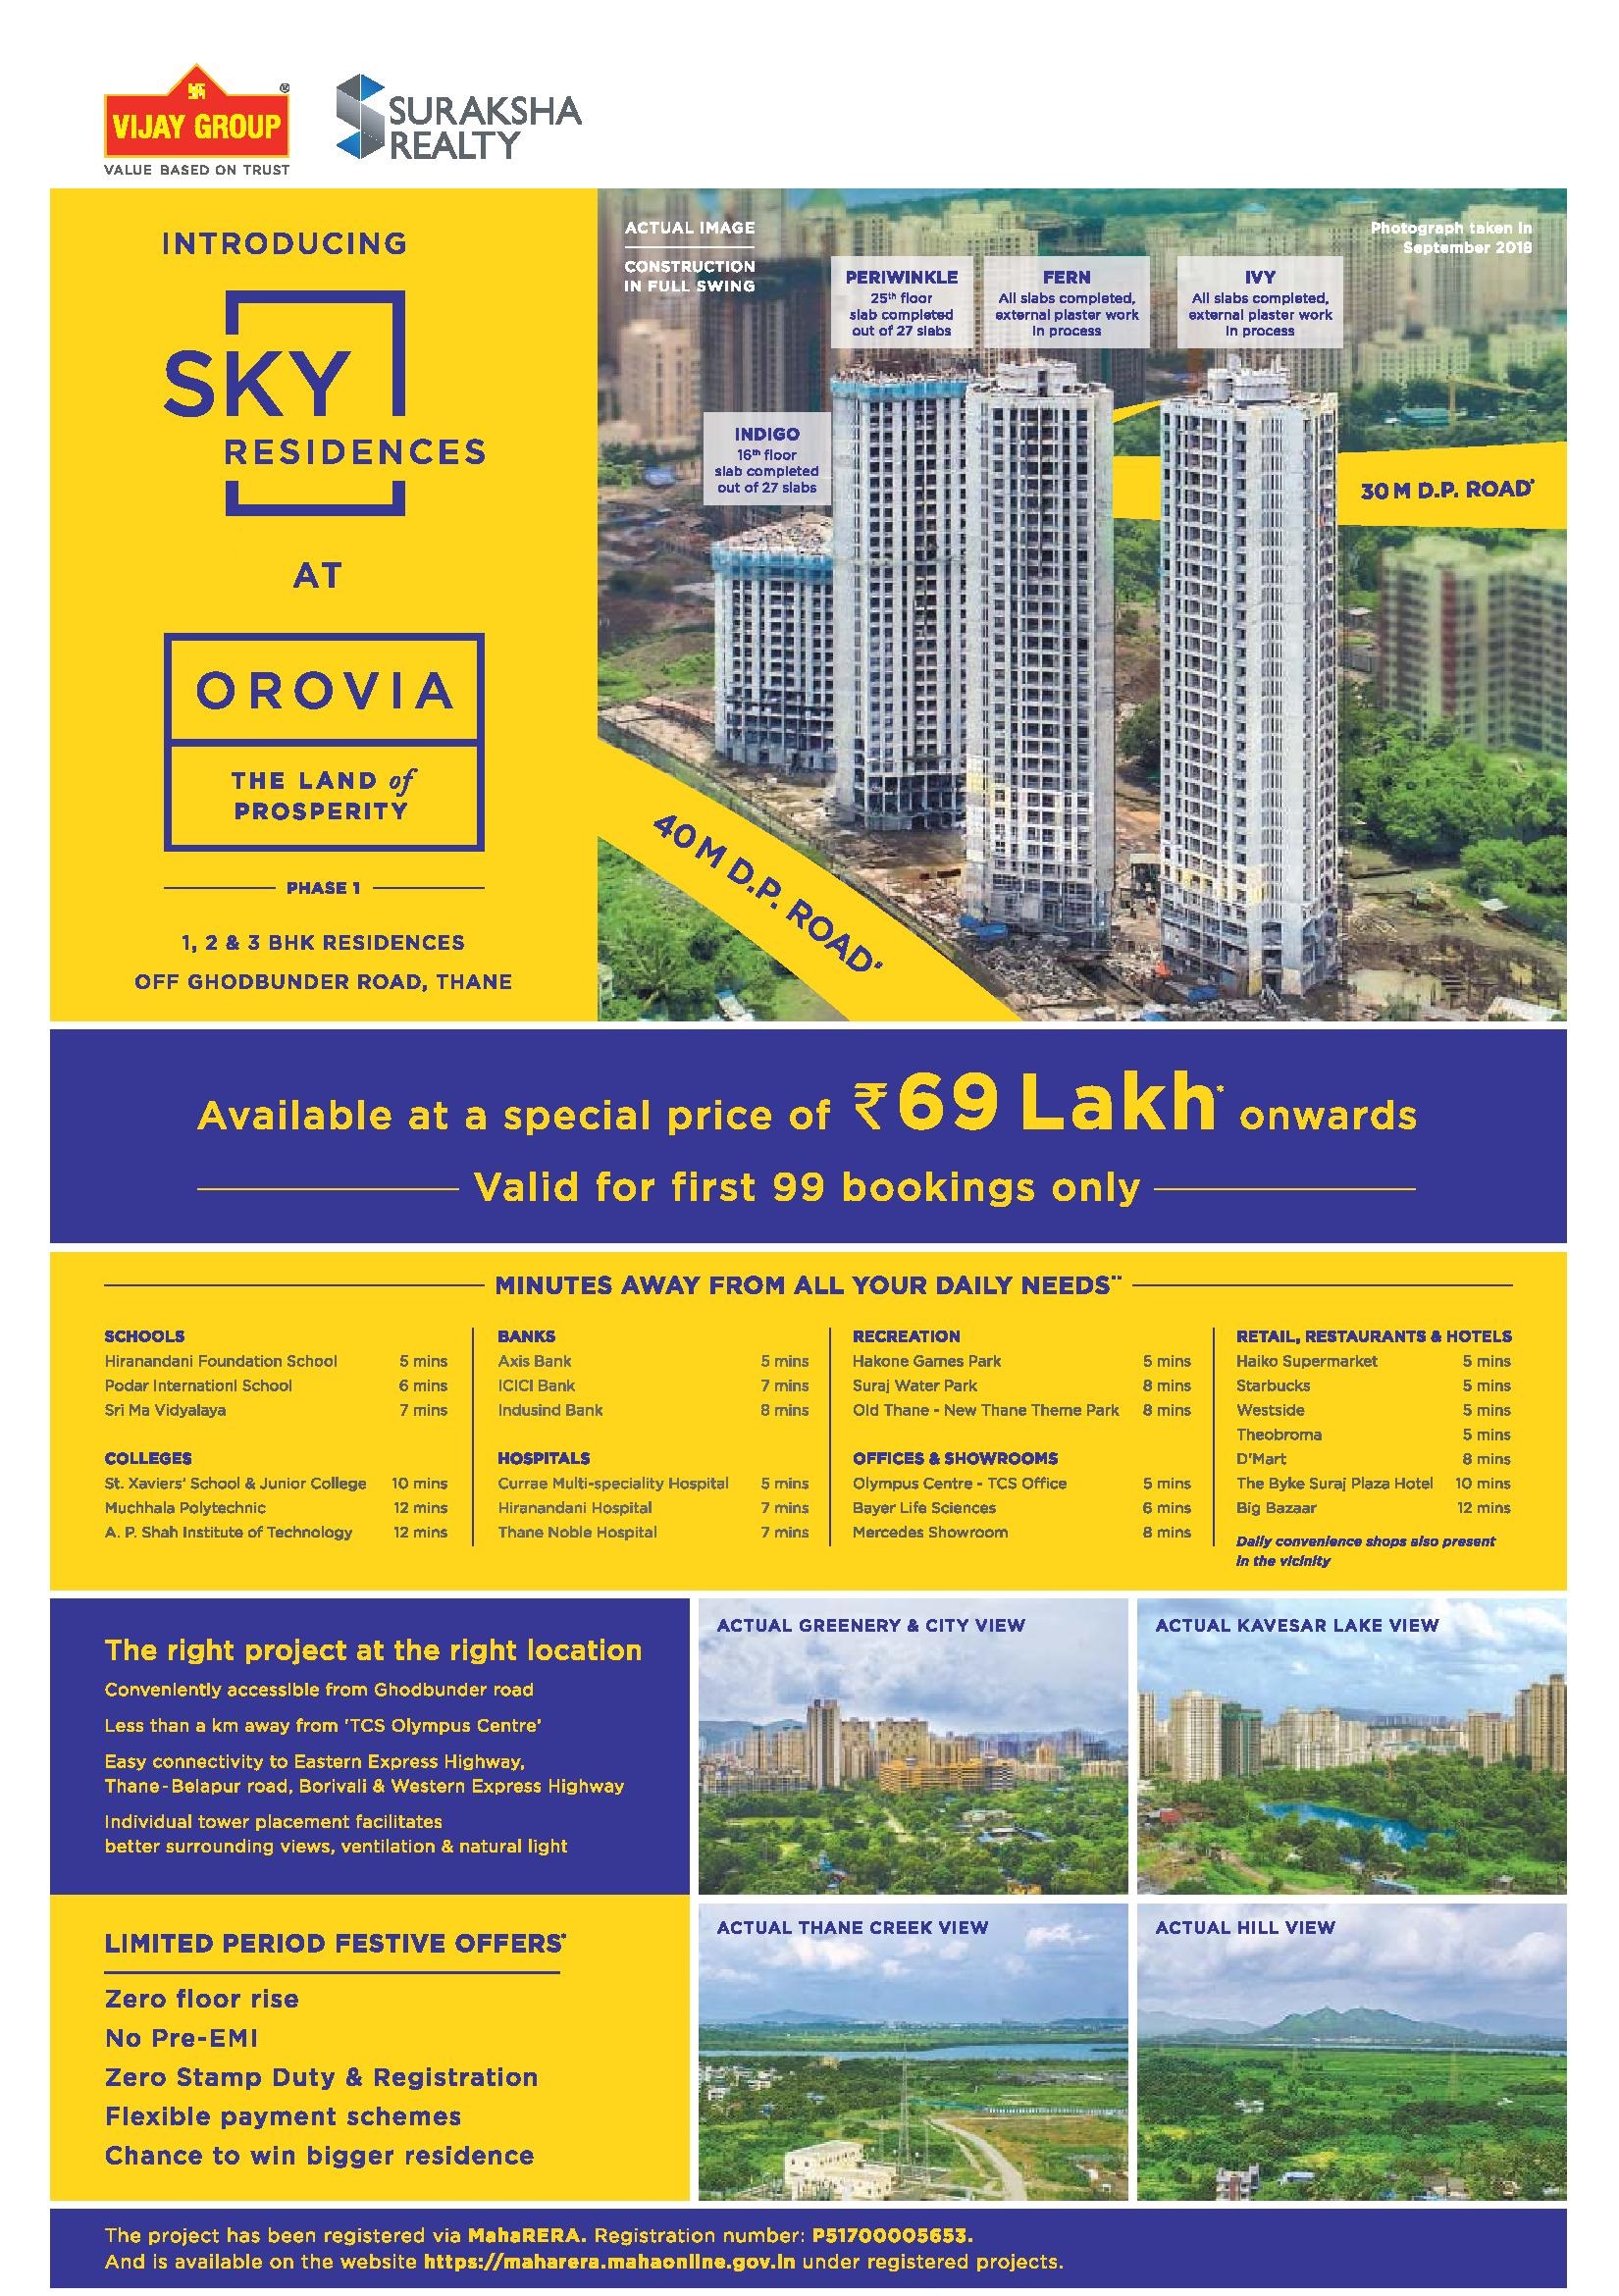 Vijay Groups introducing sky residences at Orovia in Mumbai